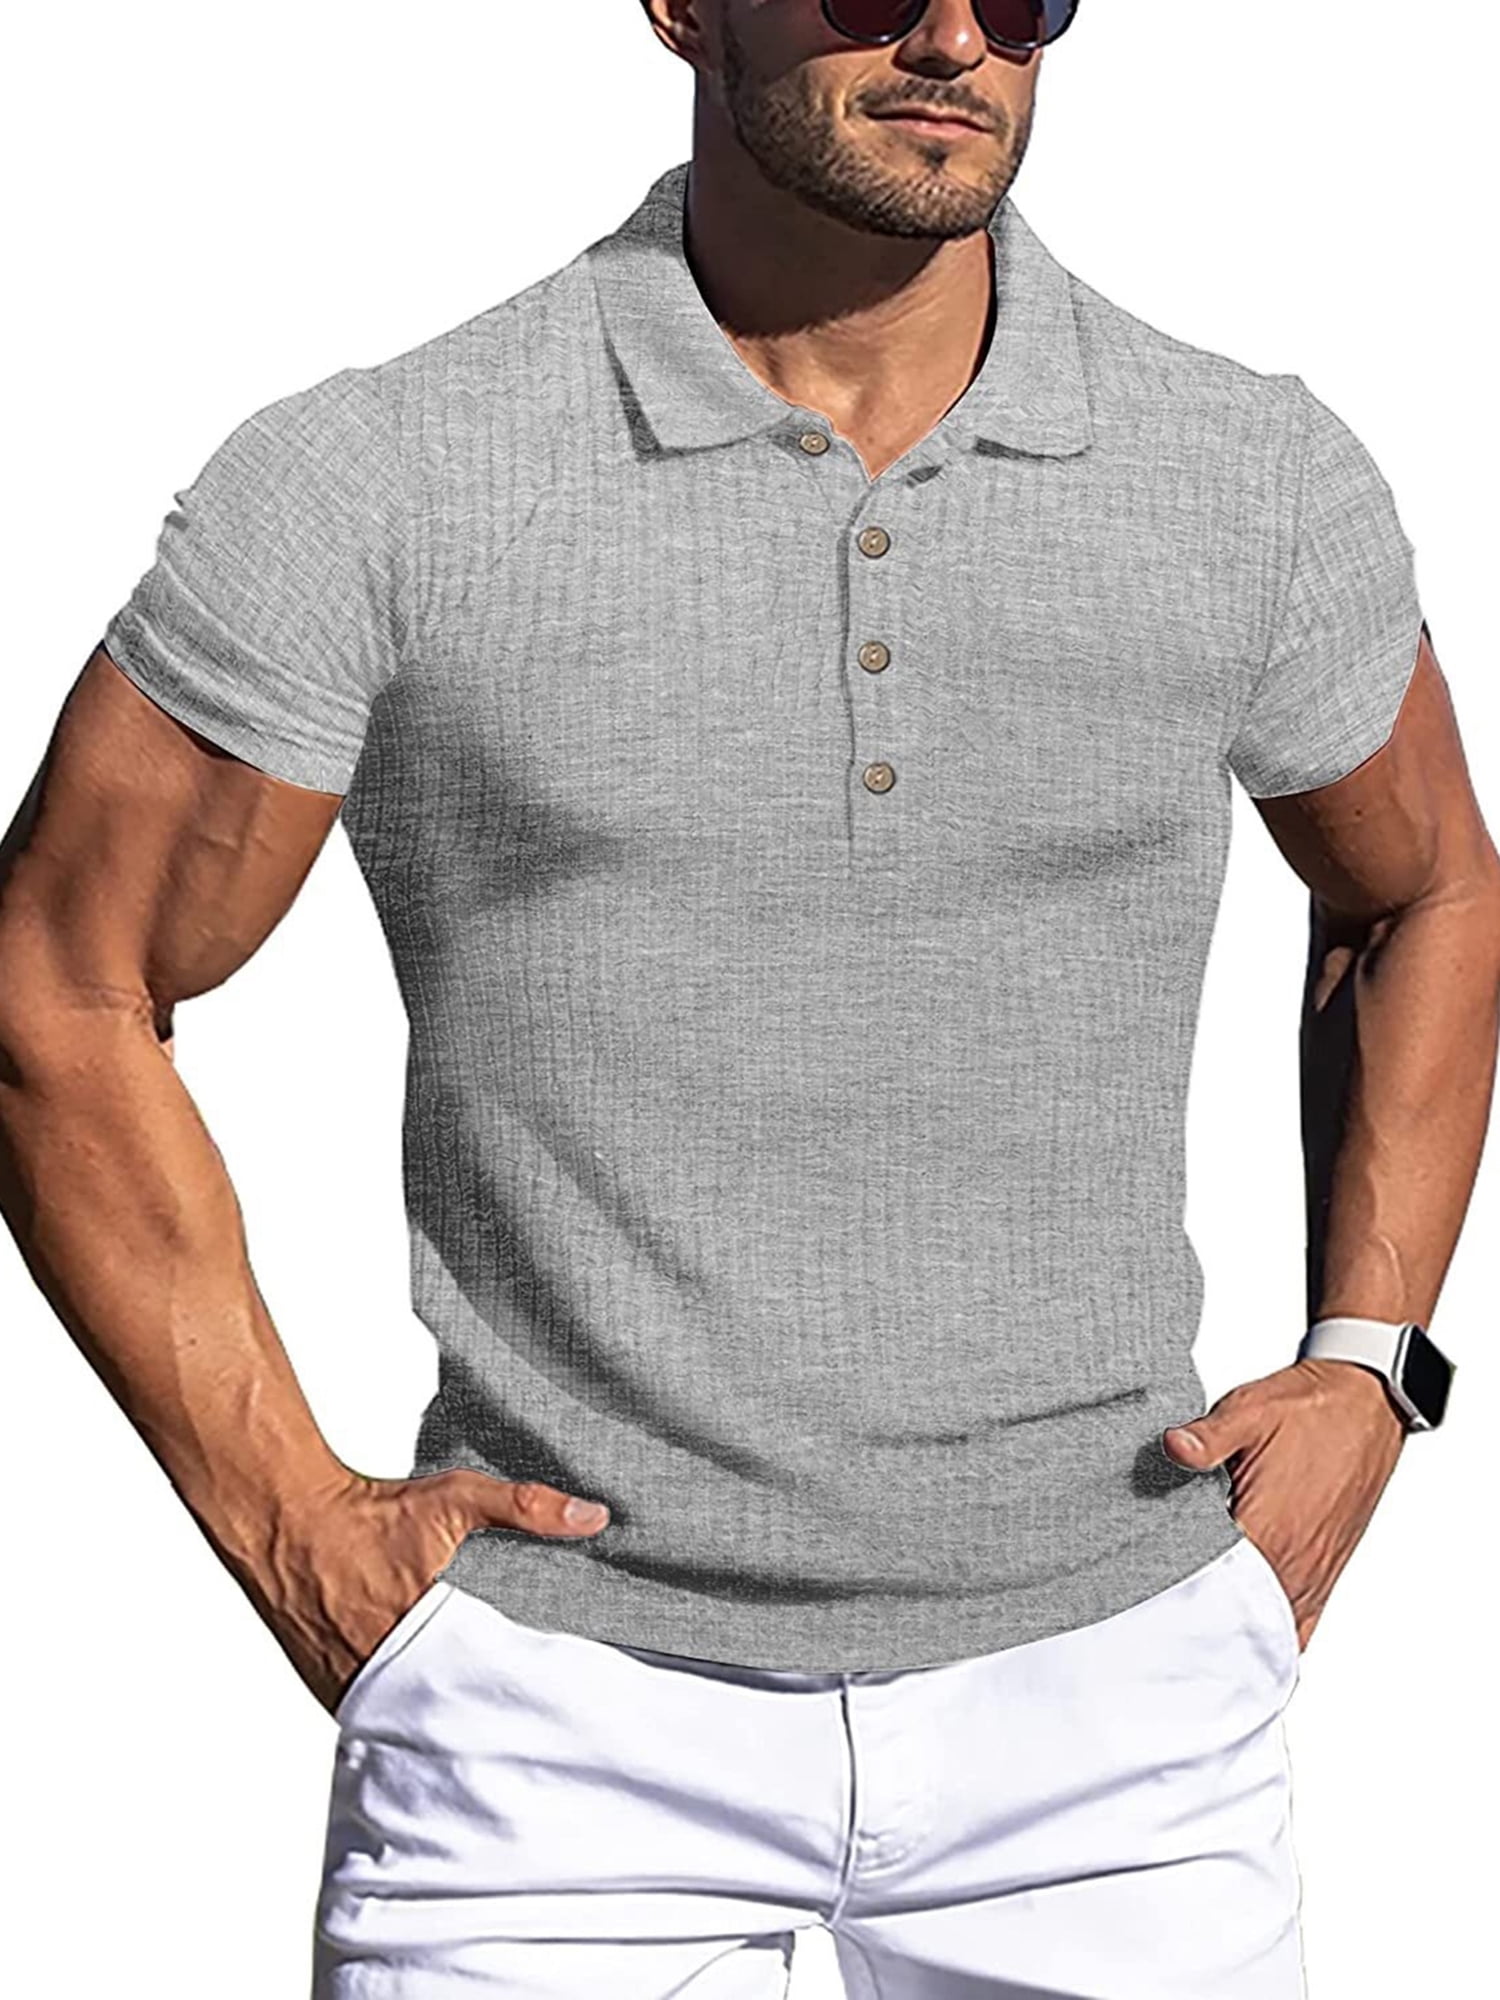 CenturyX Men's Muscle Polo Shirt Knit Ribbed Stretch Short Sleeve Workout Tee Casual Fit T Shirts Light Grey XXXL Walmart.com